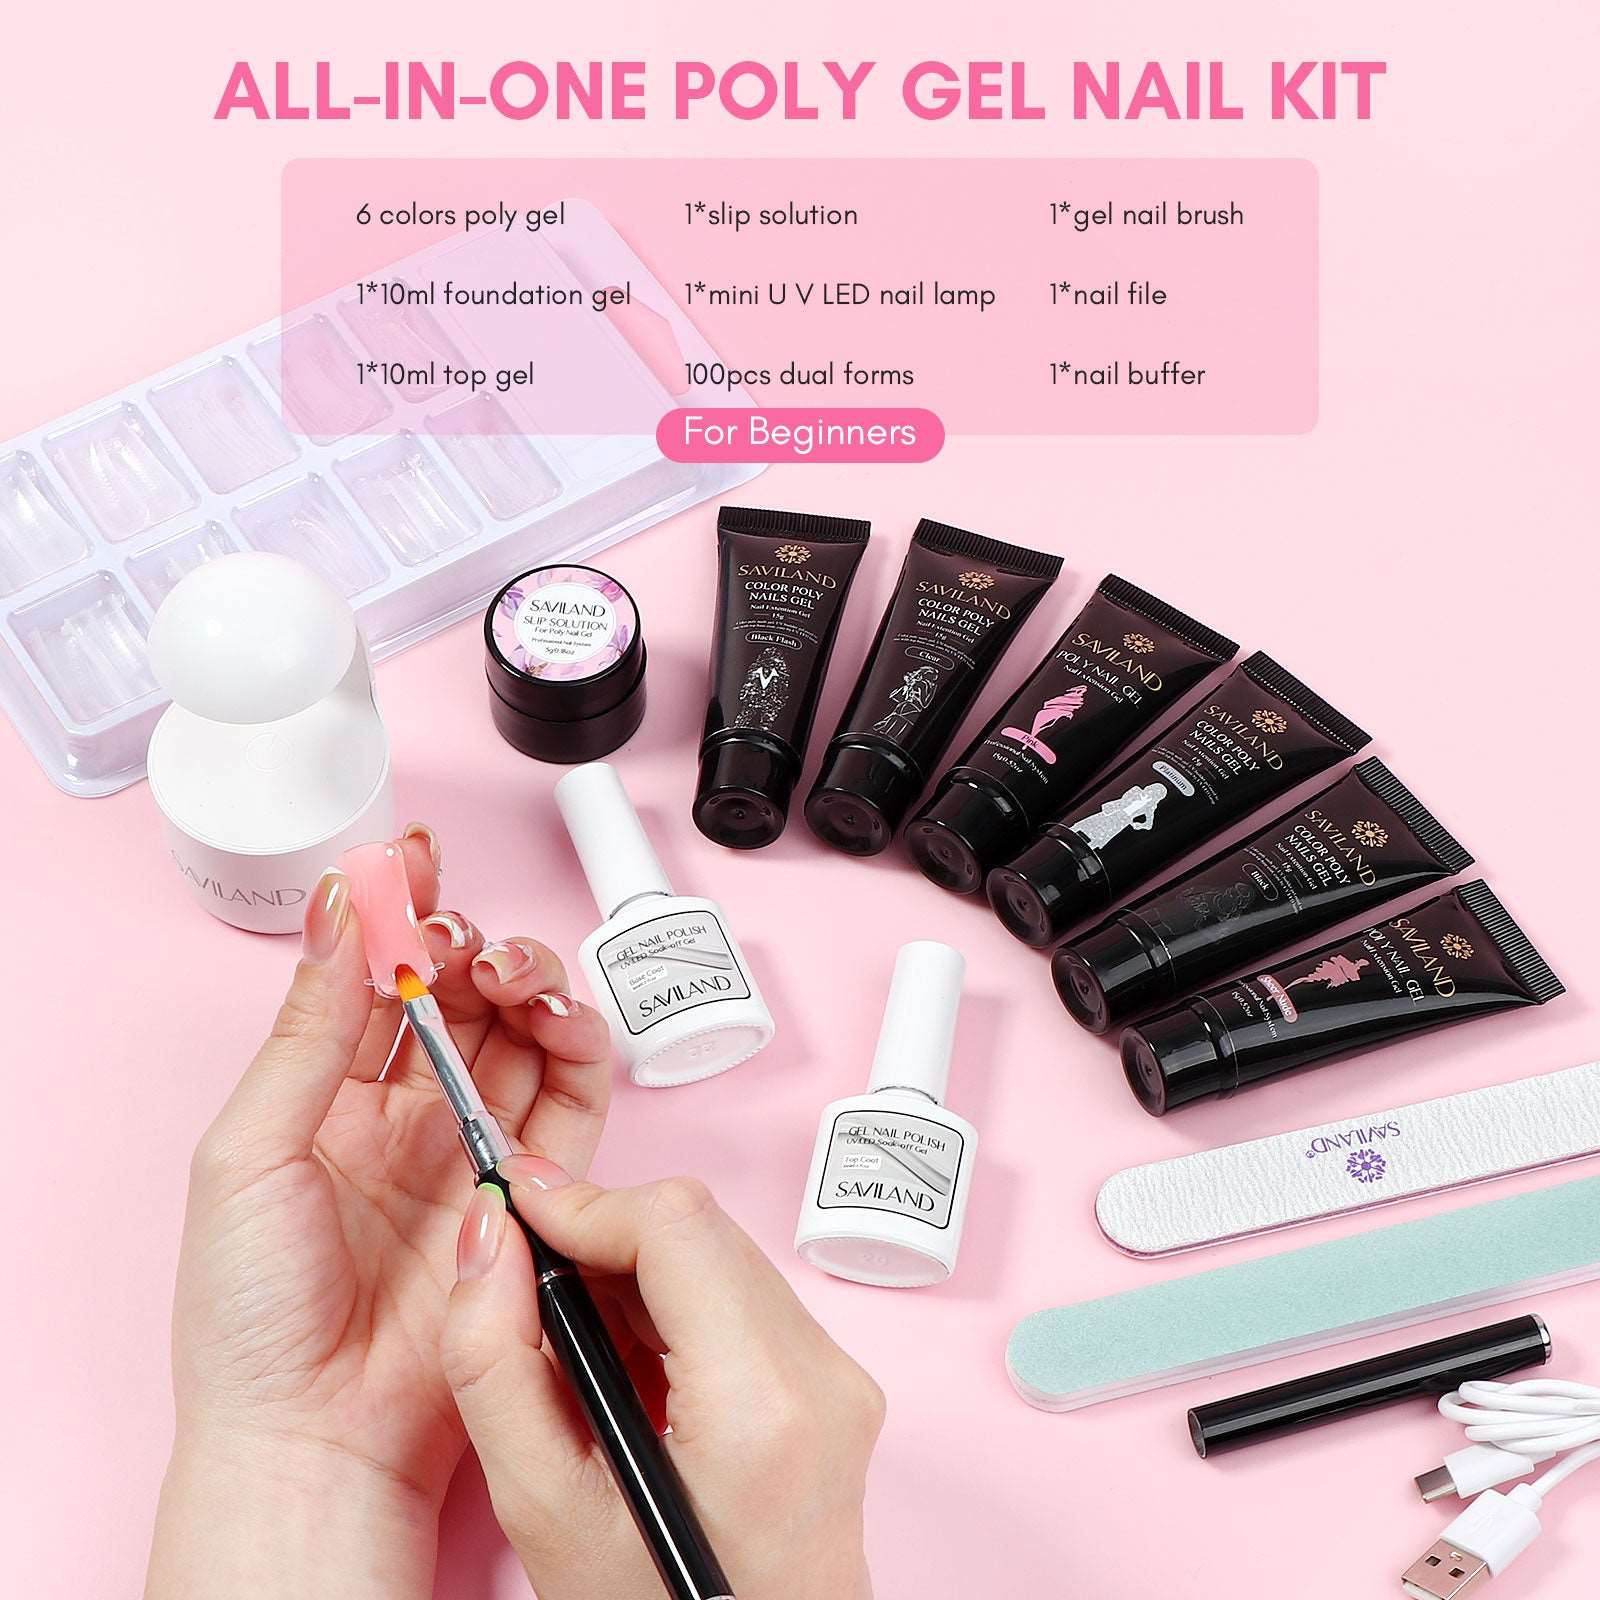 Gellen Poly Nail Gel Kit - Nail Gel Extension Kit with Base Coat Top Coat  and Dual Forms, Poly Gel Nail Kit for Beginner DIY Nail Art at Home - 6  Colors